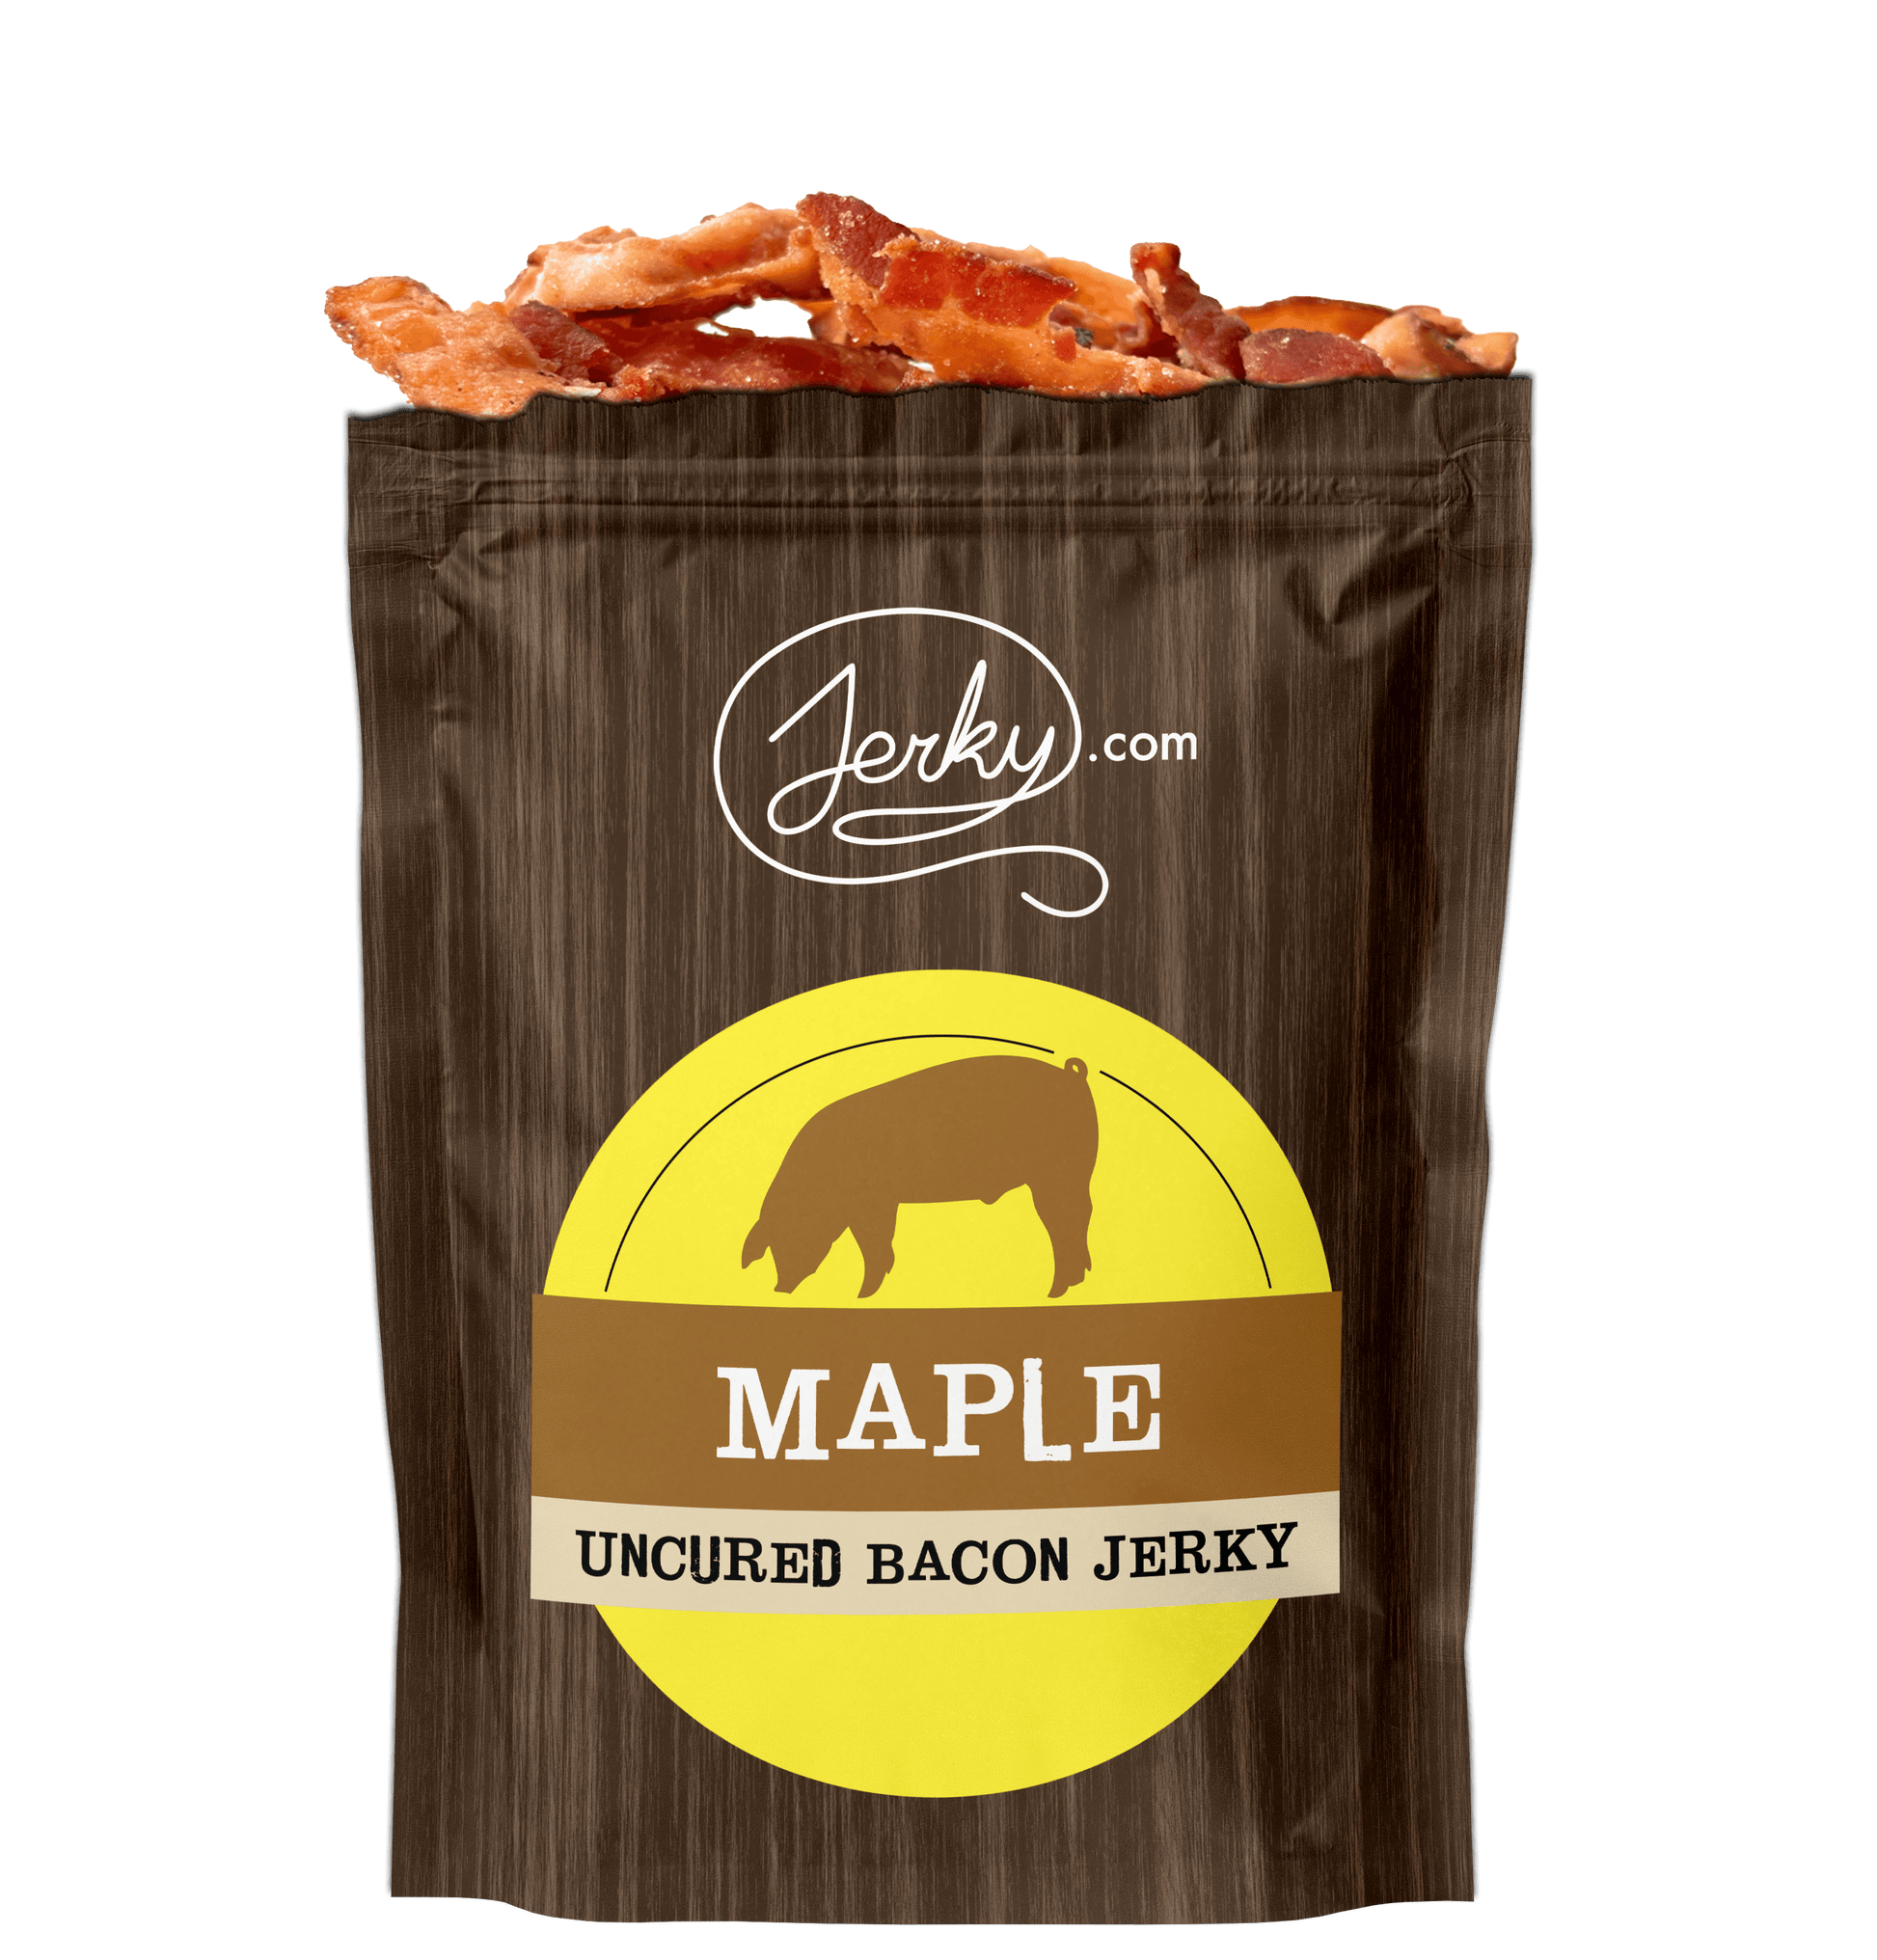 Bacon Jerky - Maple by Jerky.com